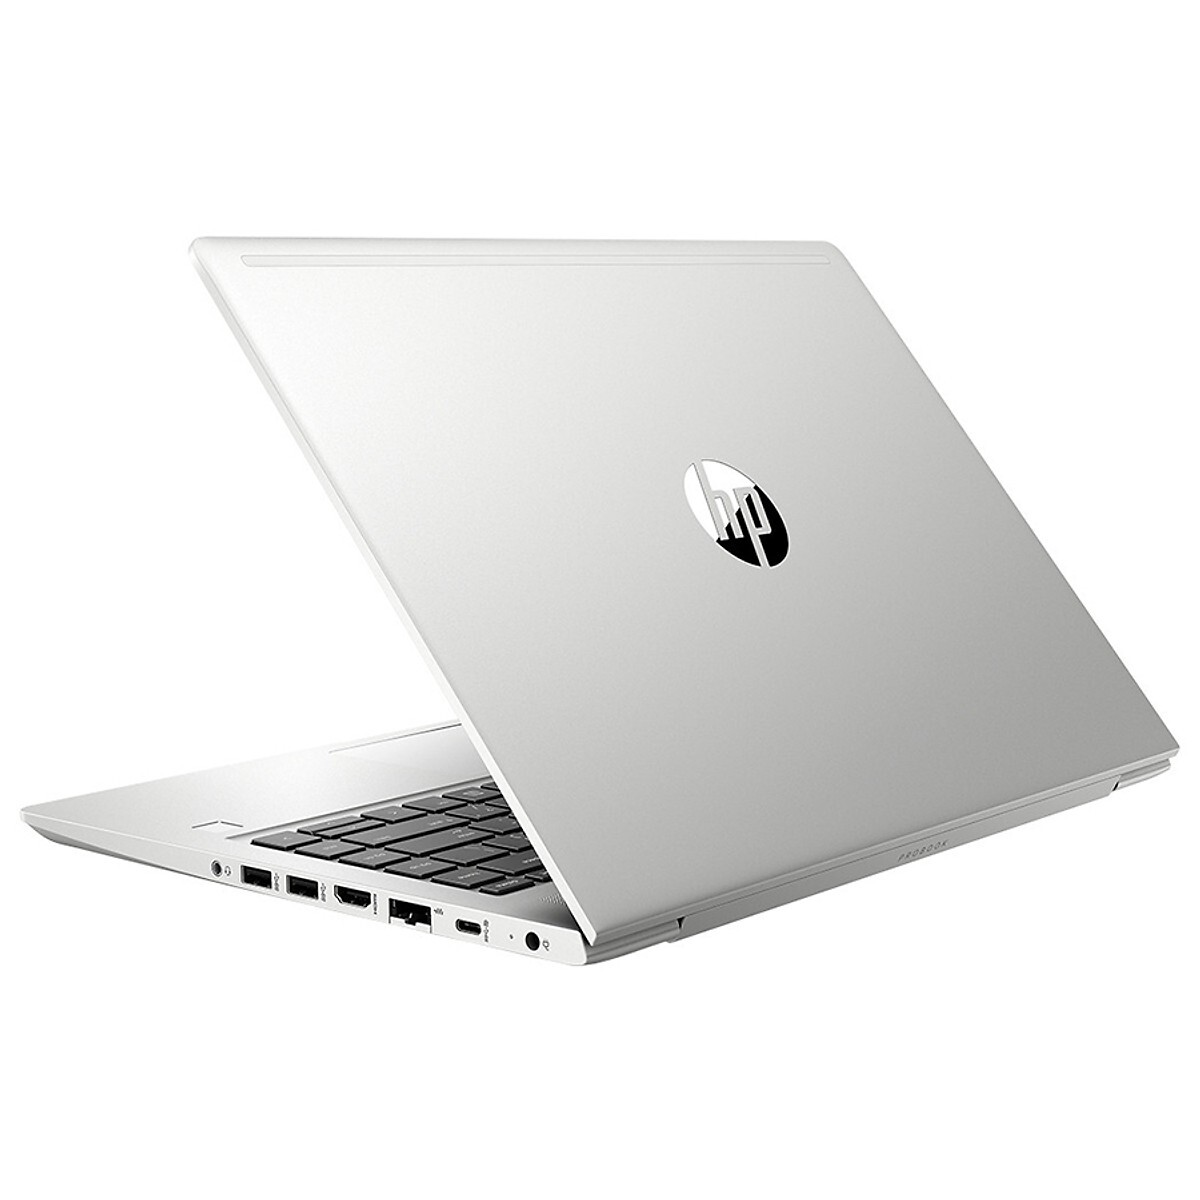 Laptop HP ProBook 450 G6 5YM72PA - Intel Core i5-8265U, 4GB RAM, HDD 1TB, Intel UHD Graphics 620, 15.6 inch